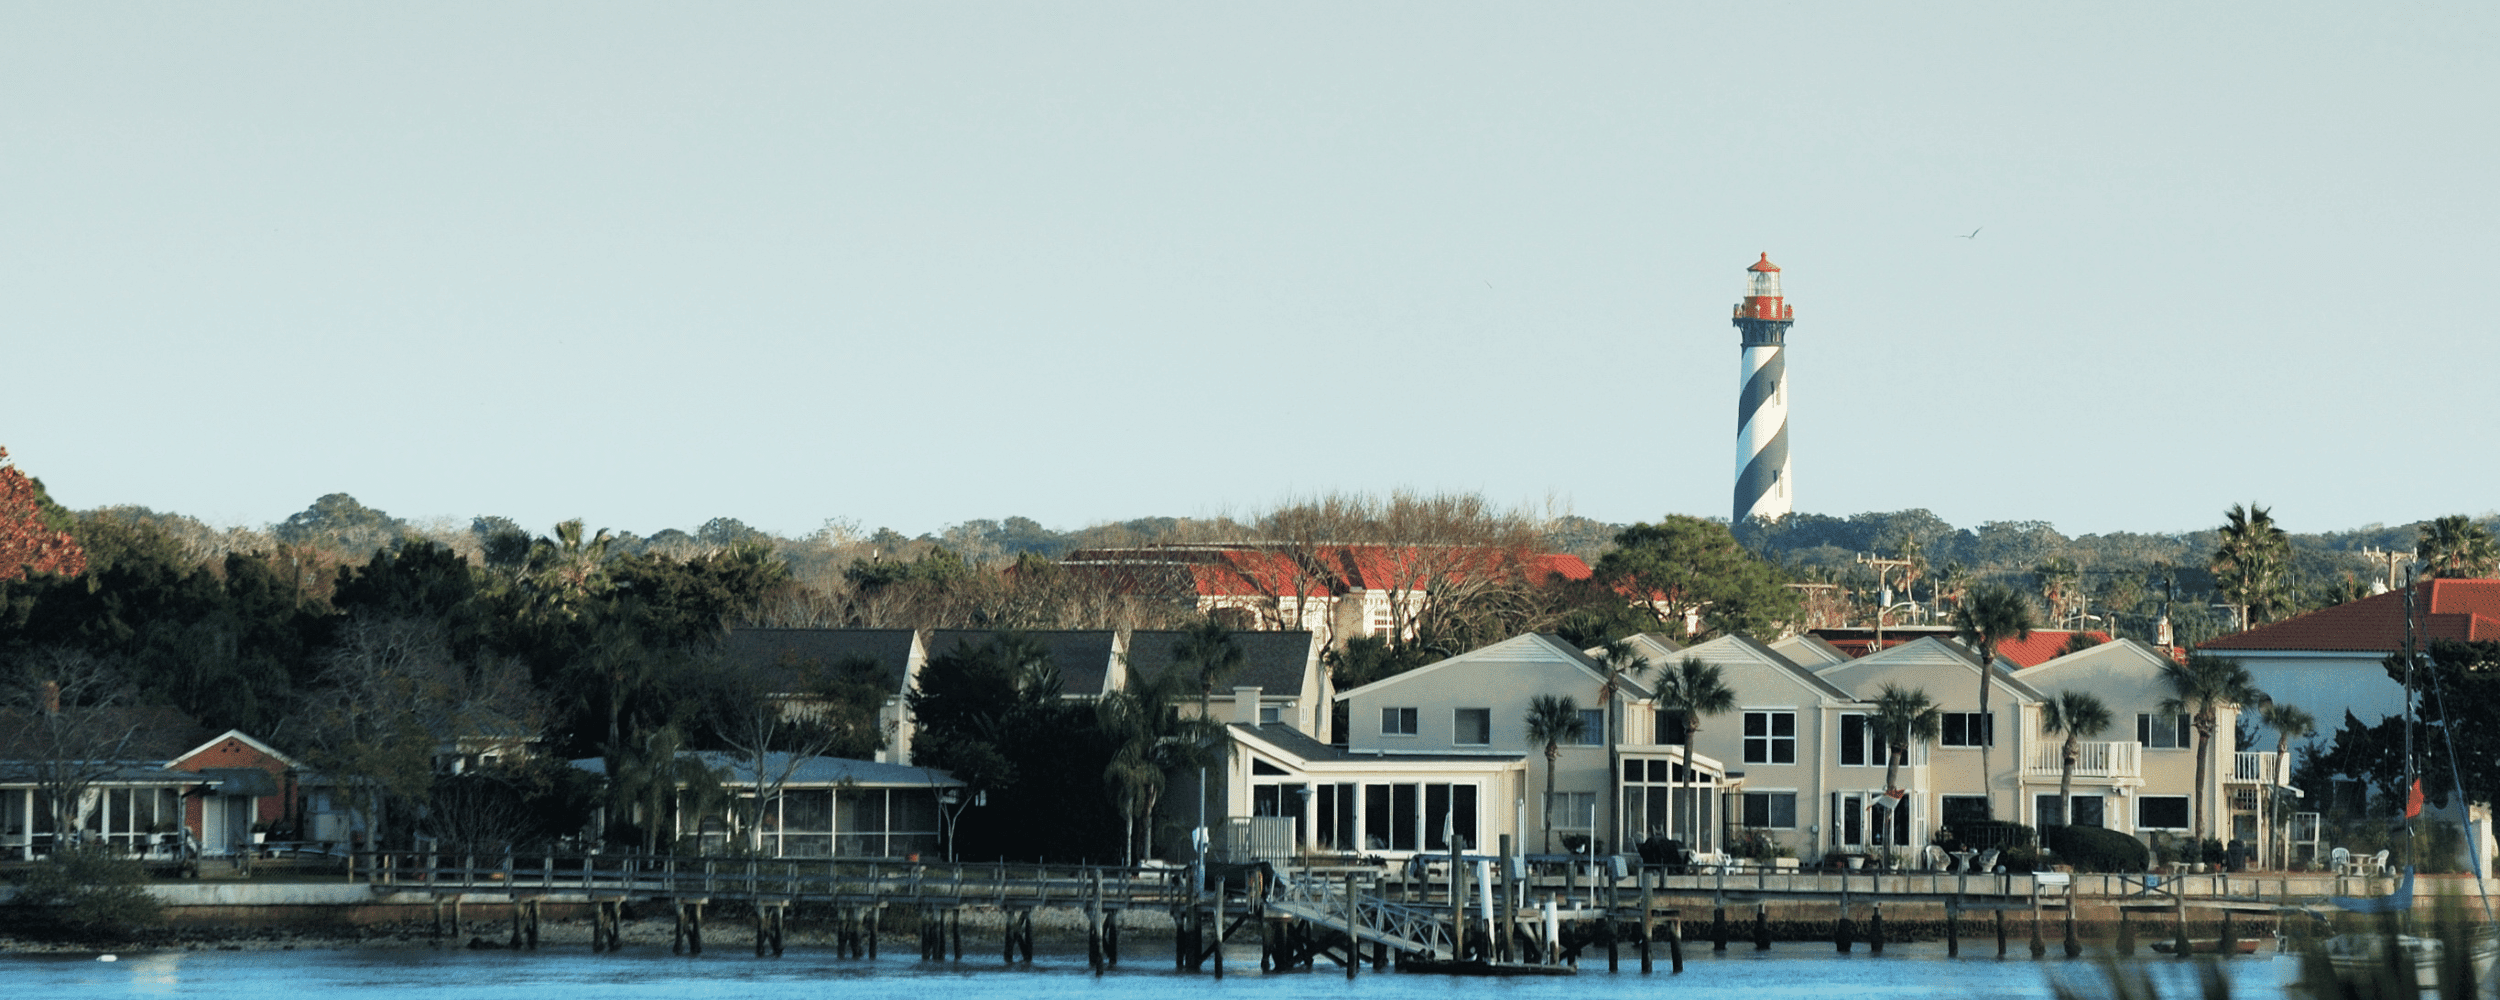 fowey rocks lighthouse in florida